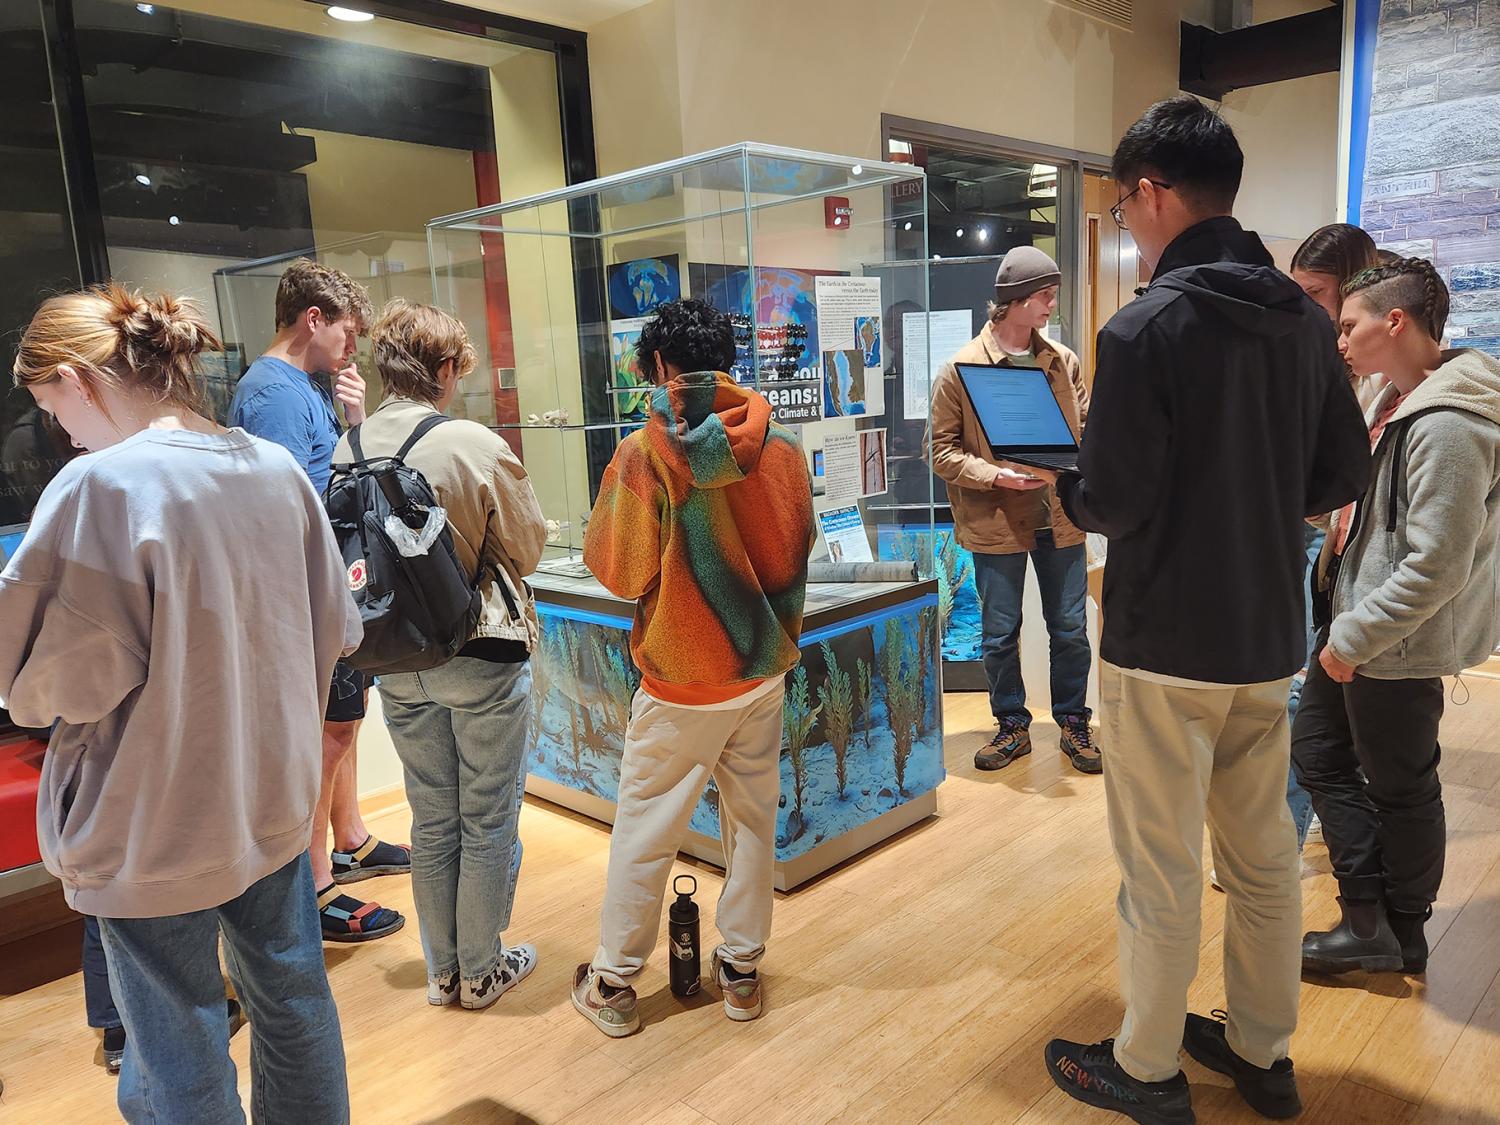 Students tour the EMS museum exhibit titled "Cretaceous Oceans and Climate."